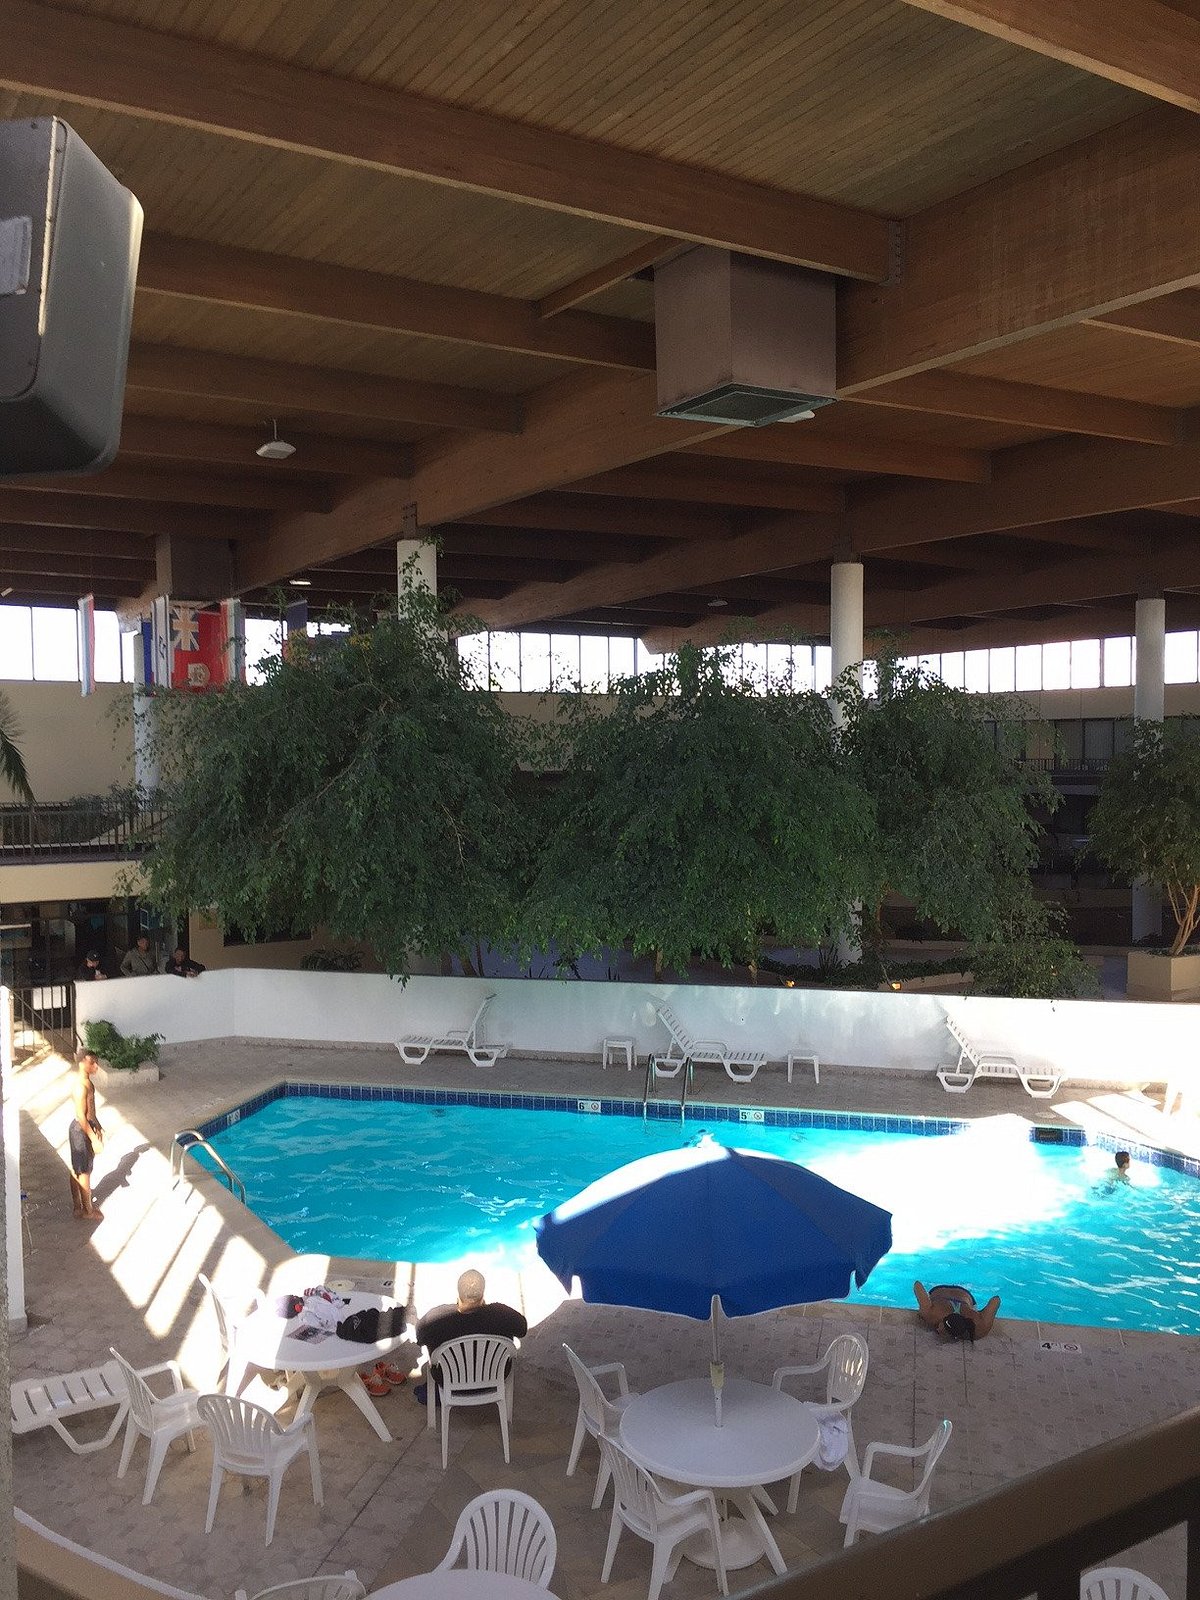 Wyndham Garden Romulus Detroit Metro Airport Pool Pictures And Reviews Tripadvisor